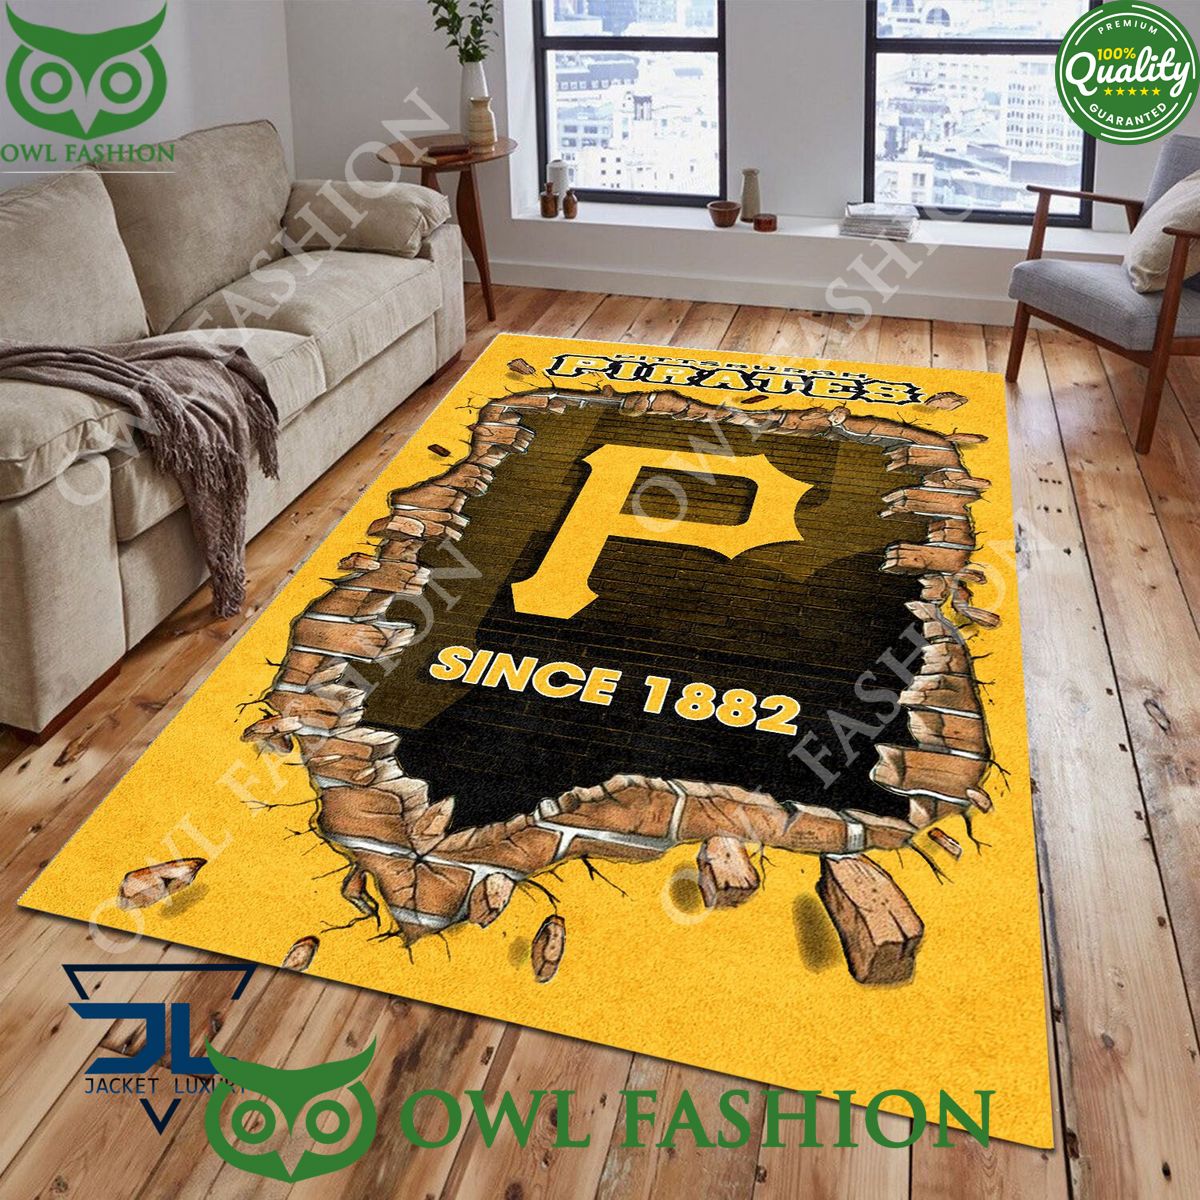 broken wall pittsburgh pirates mlb baseball team rug carpet living room 1 tQNOB.jpg